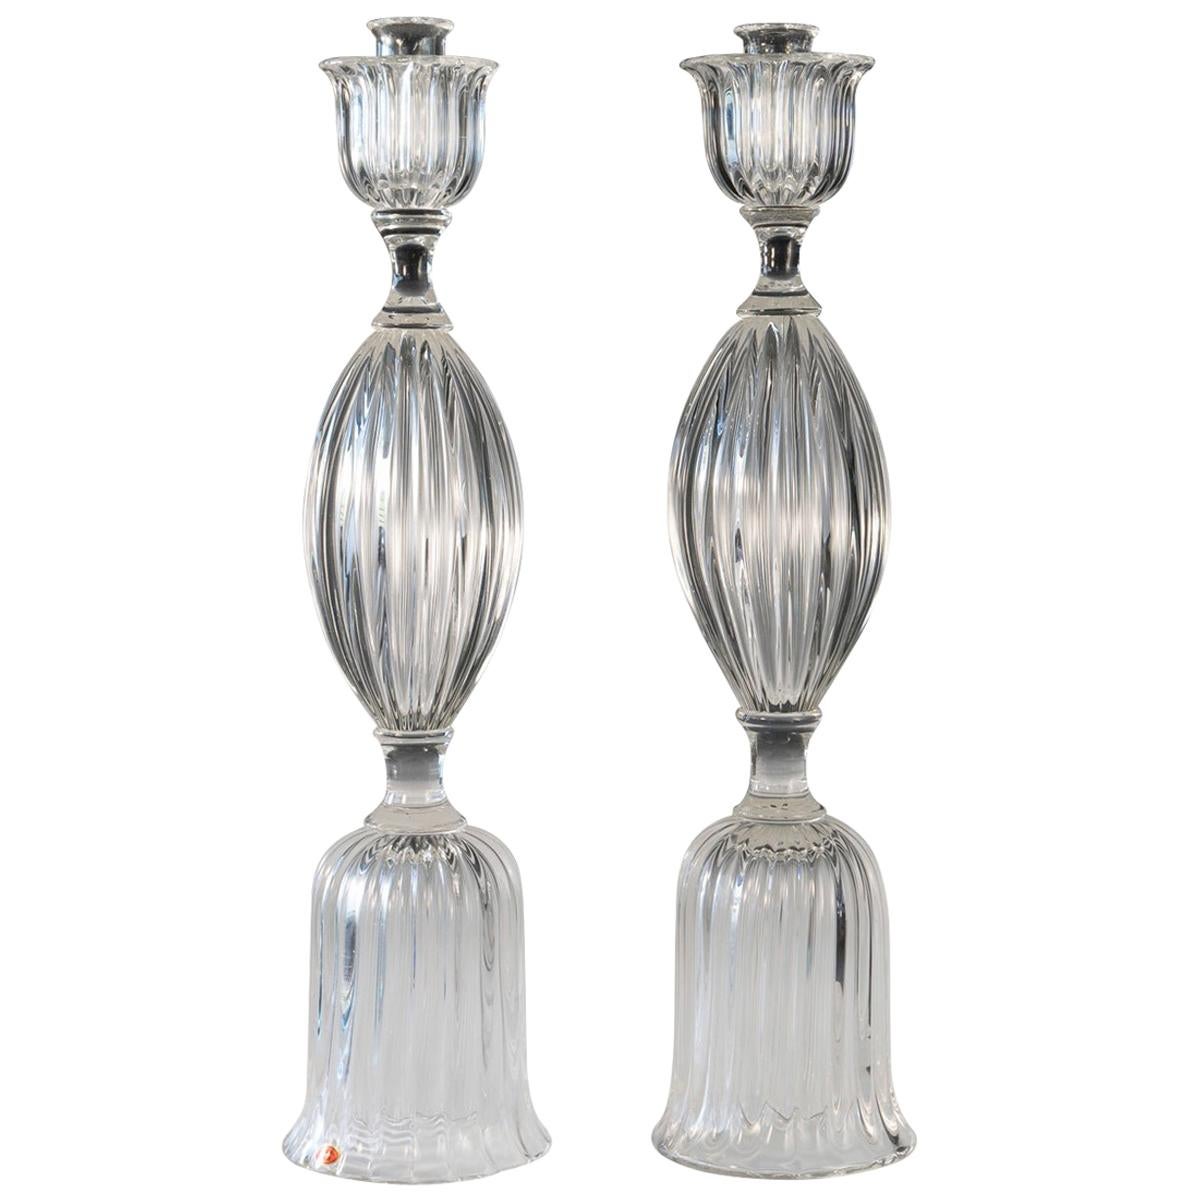 Pair of Seguso Candlesticks 3 by John Loring of Tiffany & Co.